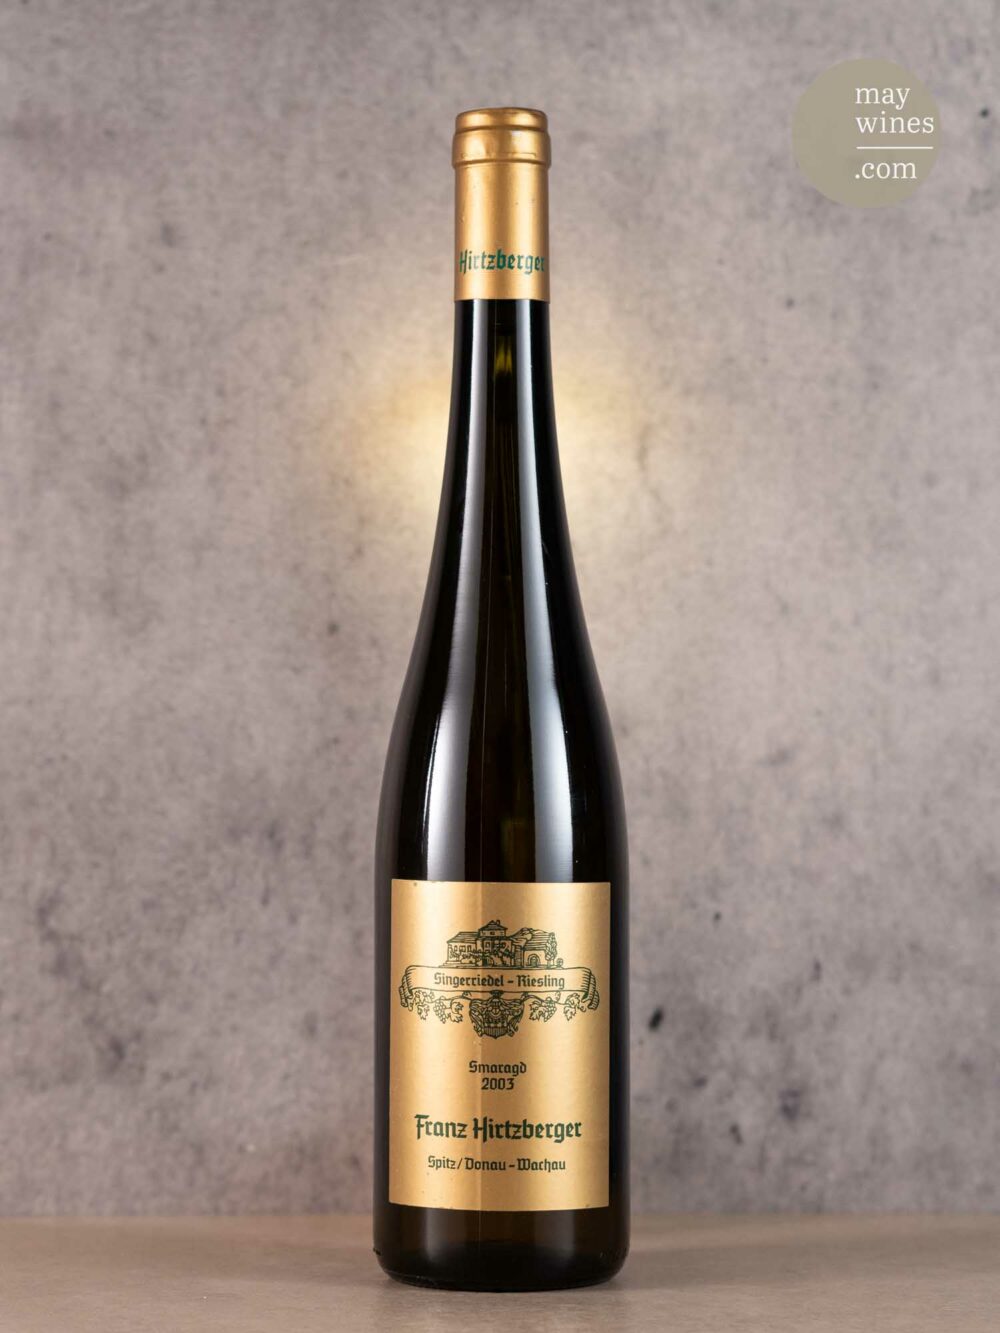 May Wines – Weißwein – 2003 Singerriedel Riesling Smaragd - Weingut Franz Hirtzberger